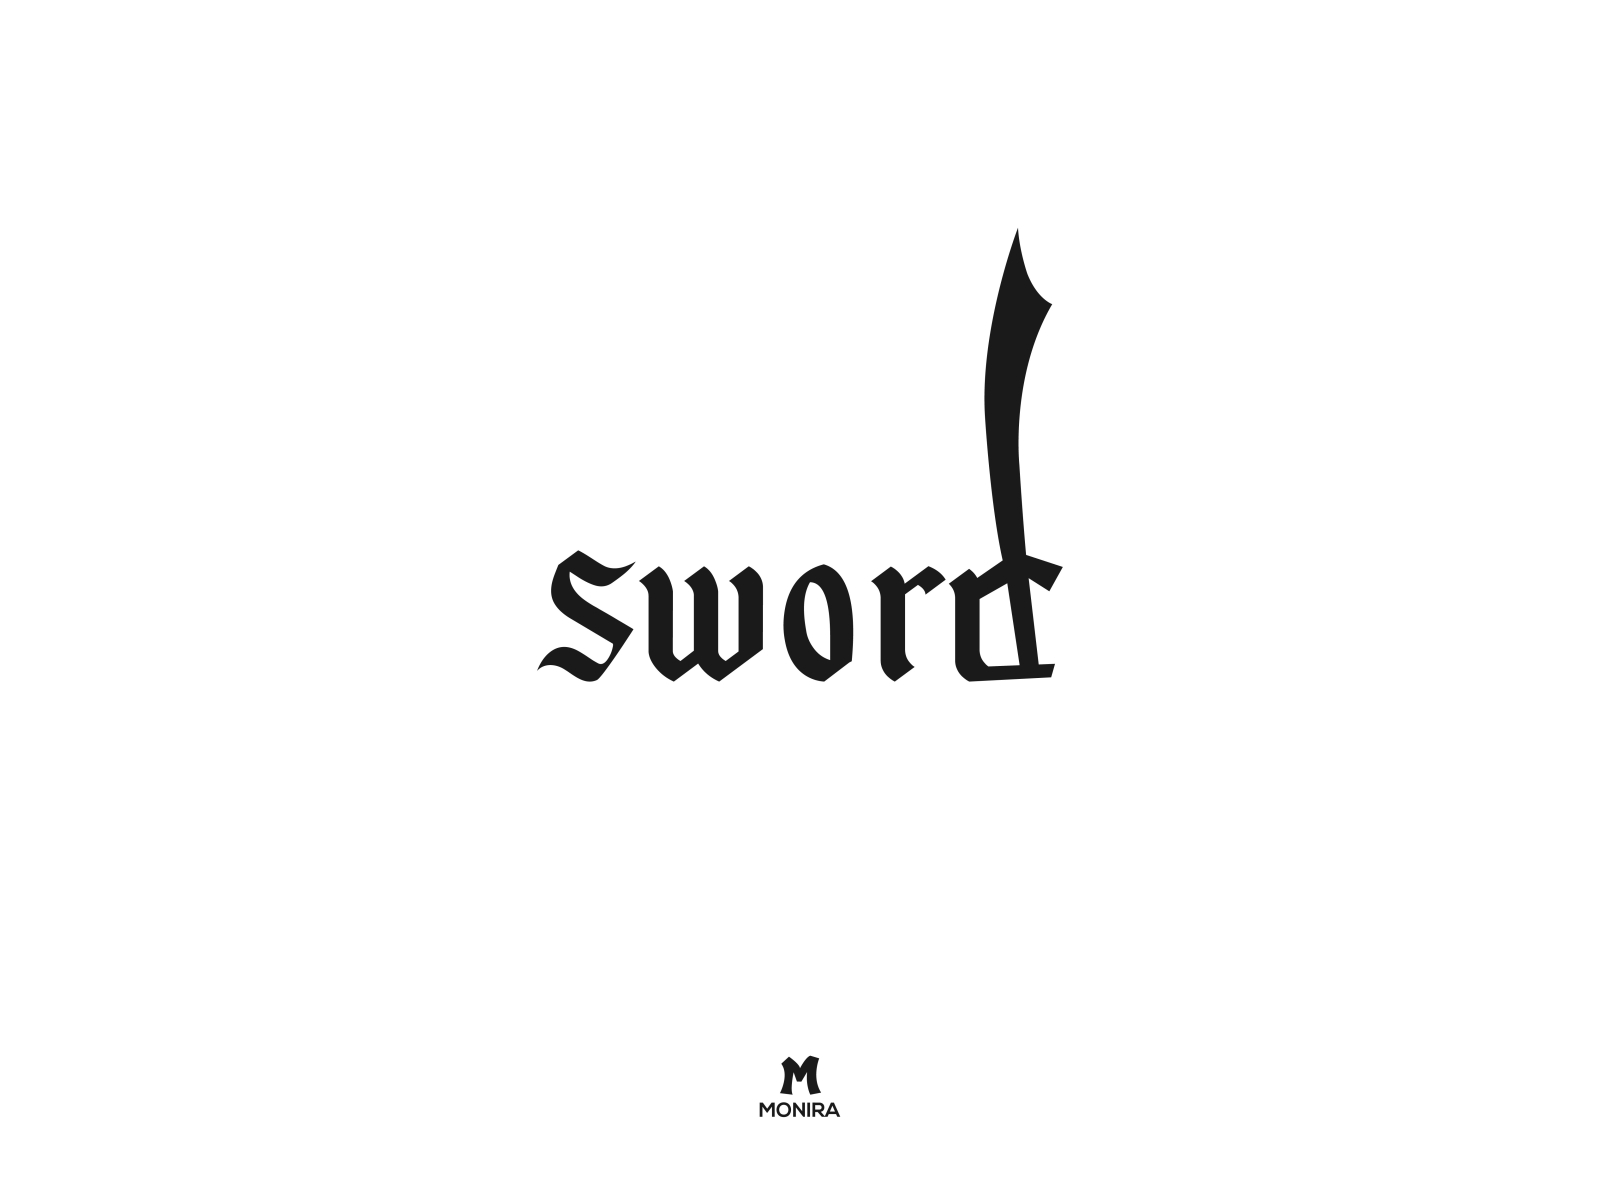 SWORD Text Logo by Monira Akter on Dribbble